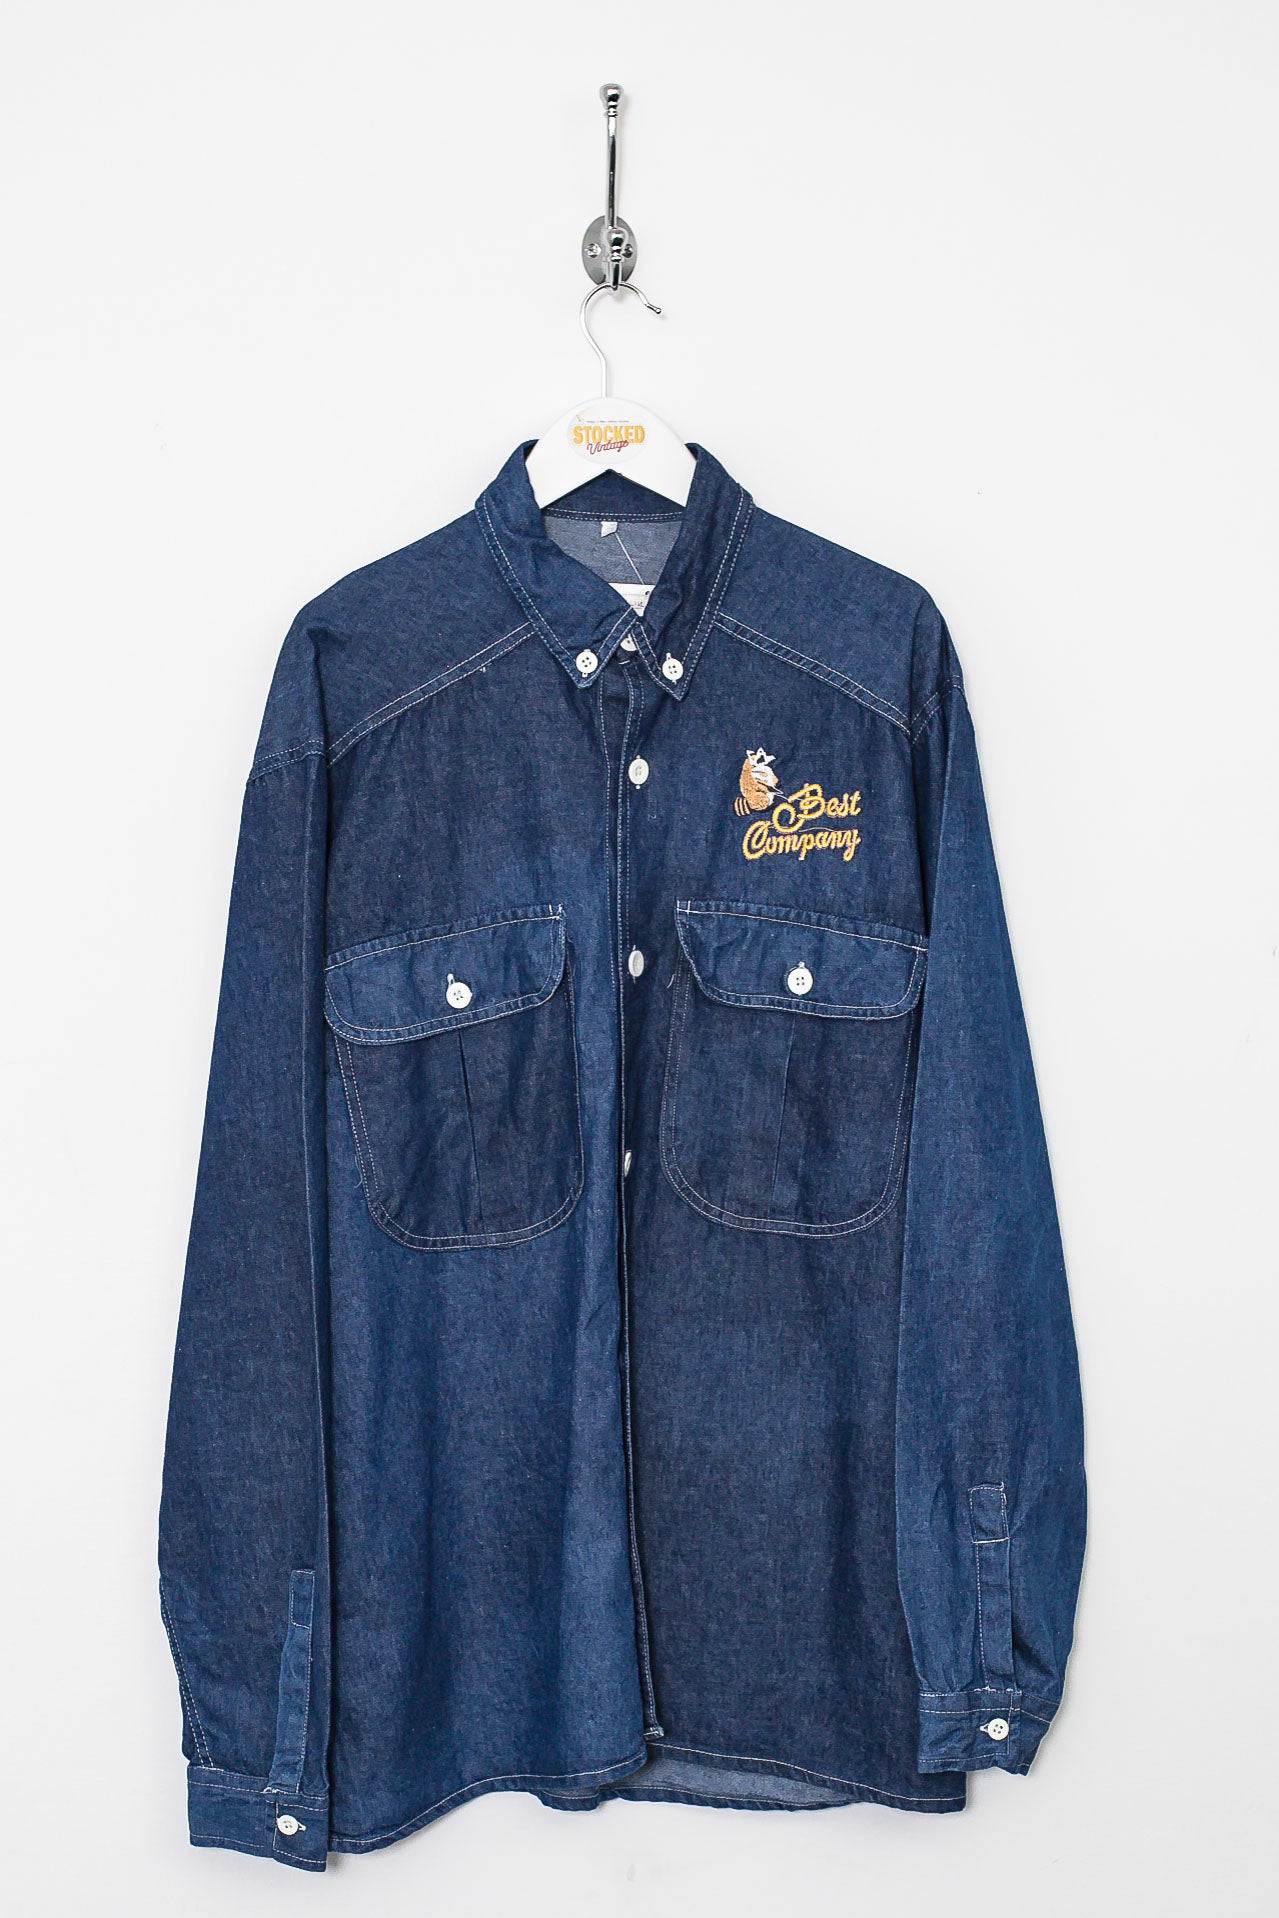 Chef Works Custom Embroidered Mens Detroit Long Sleeve Denim Shirt, Indigo  Blue, M at Amazon Men's Clothing store